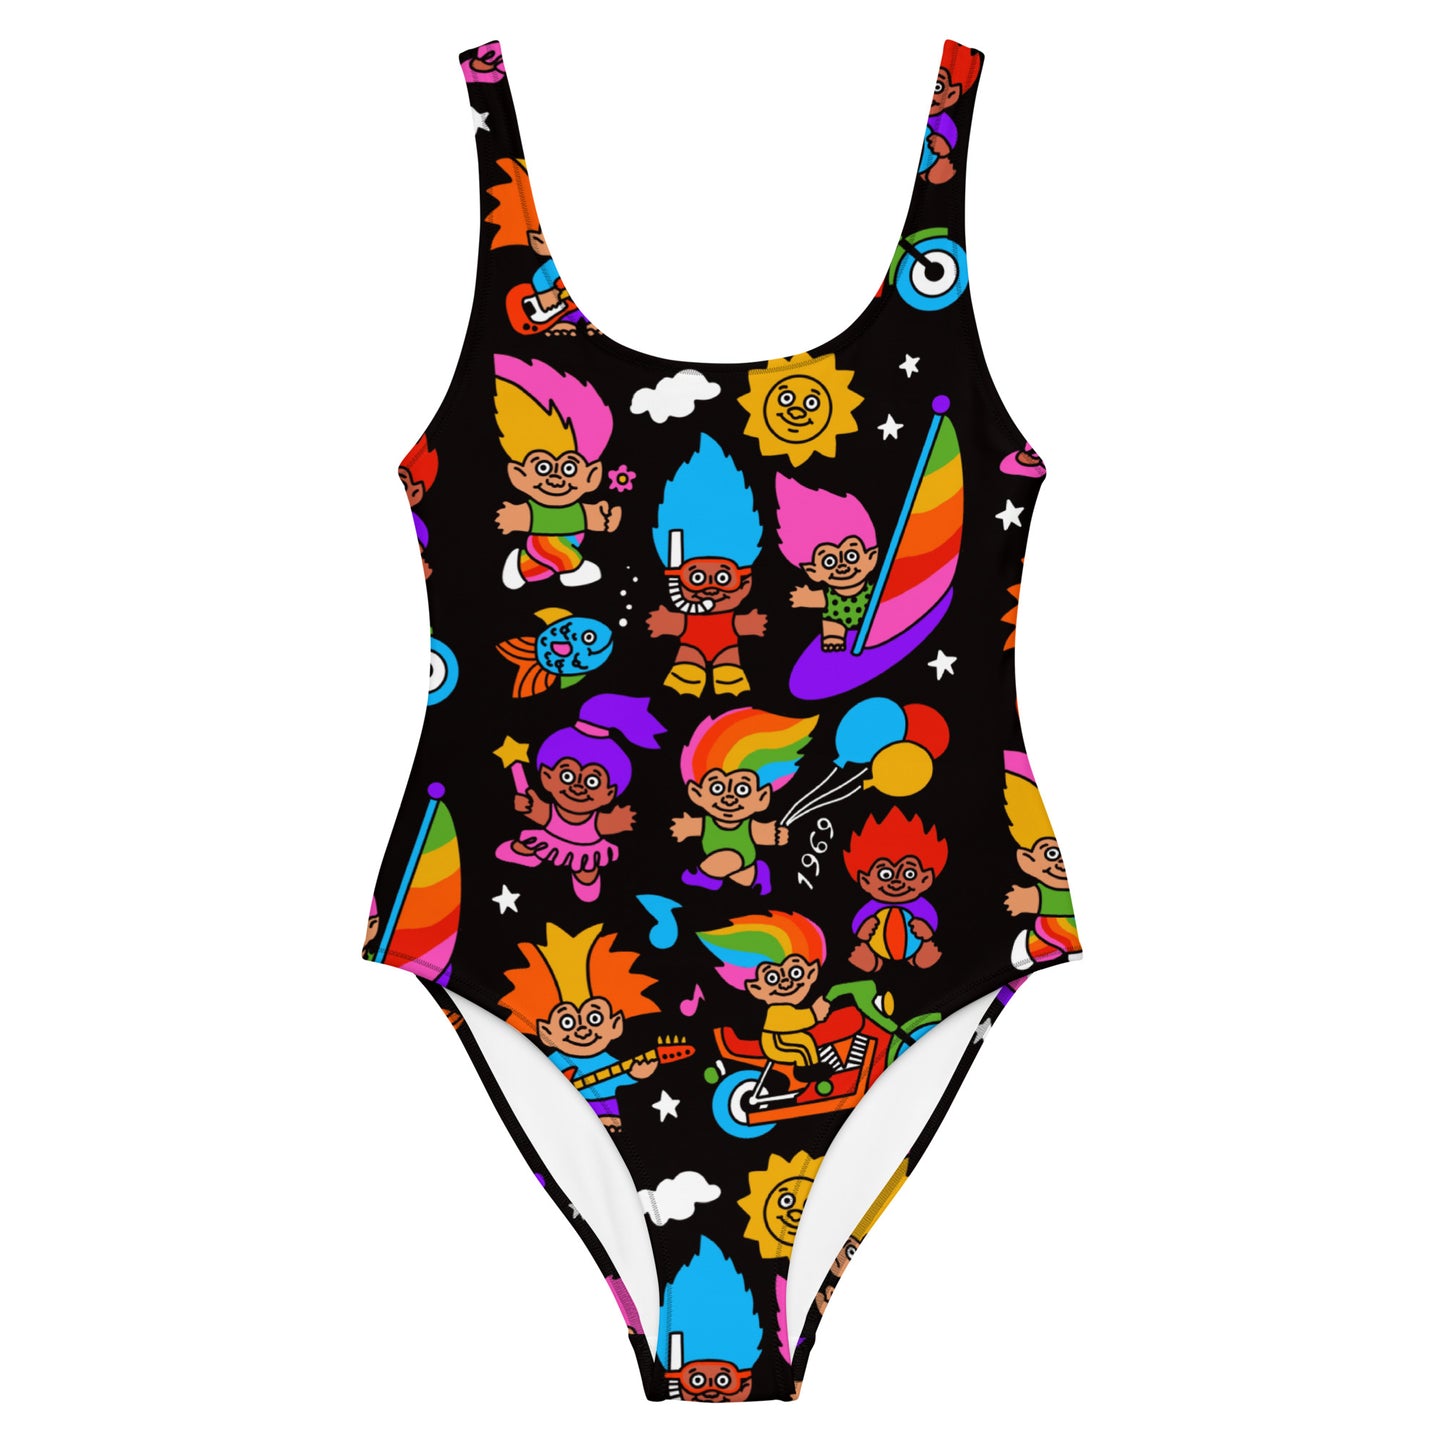 Cowabunga One-Piece Swimsuit